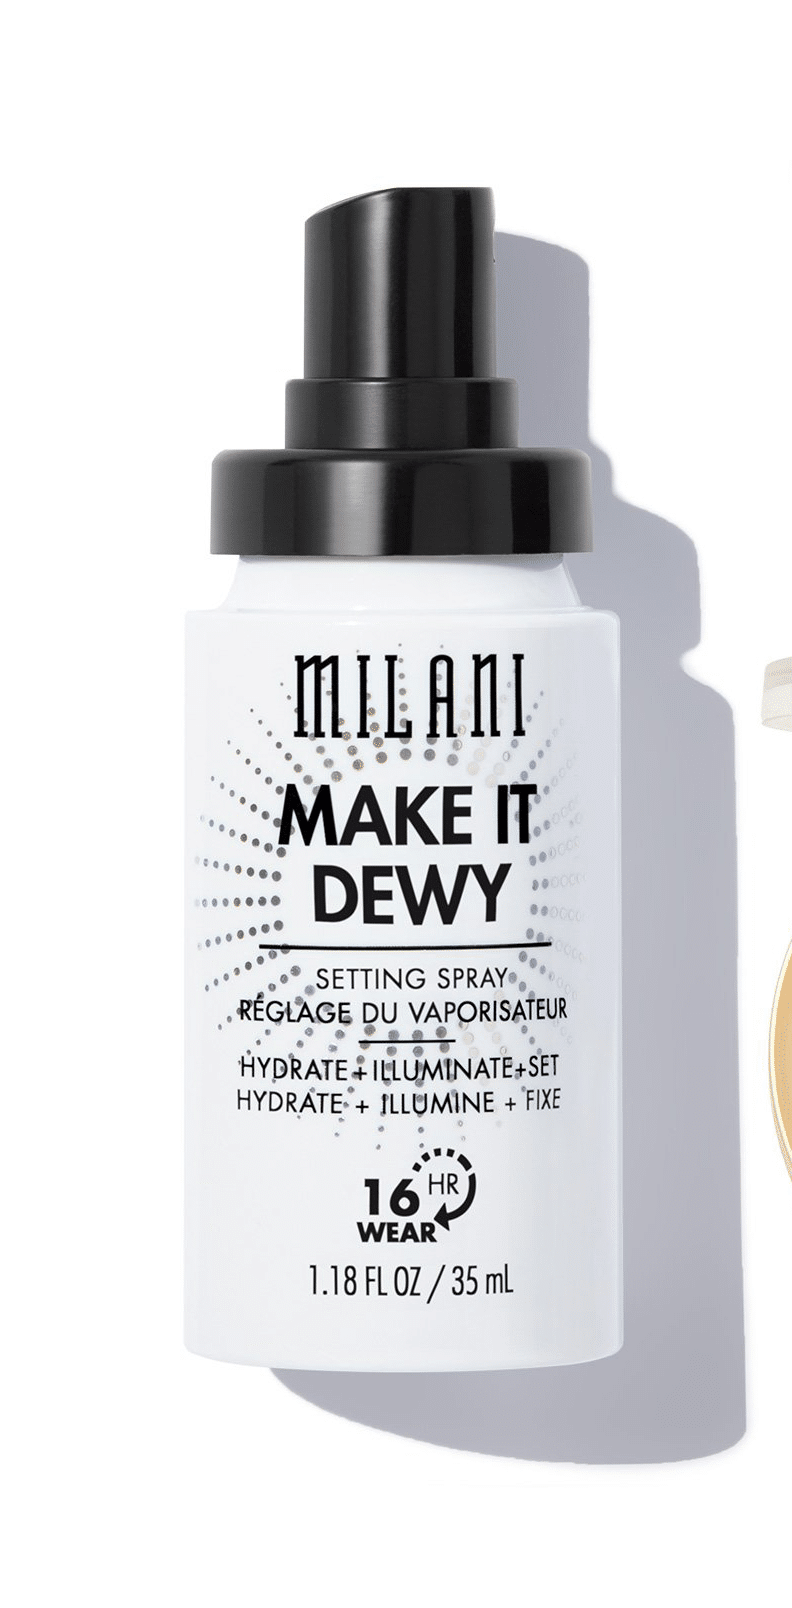 Make It Dewy 3-in-1 Setting Spray Hydrate + Illuminate + Set